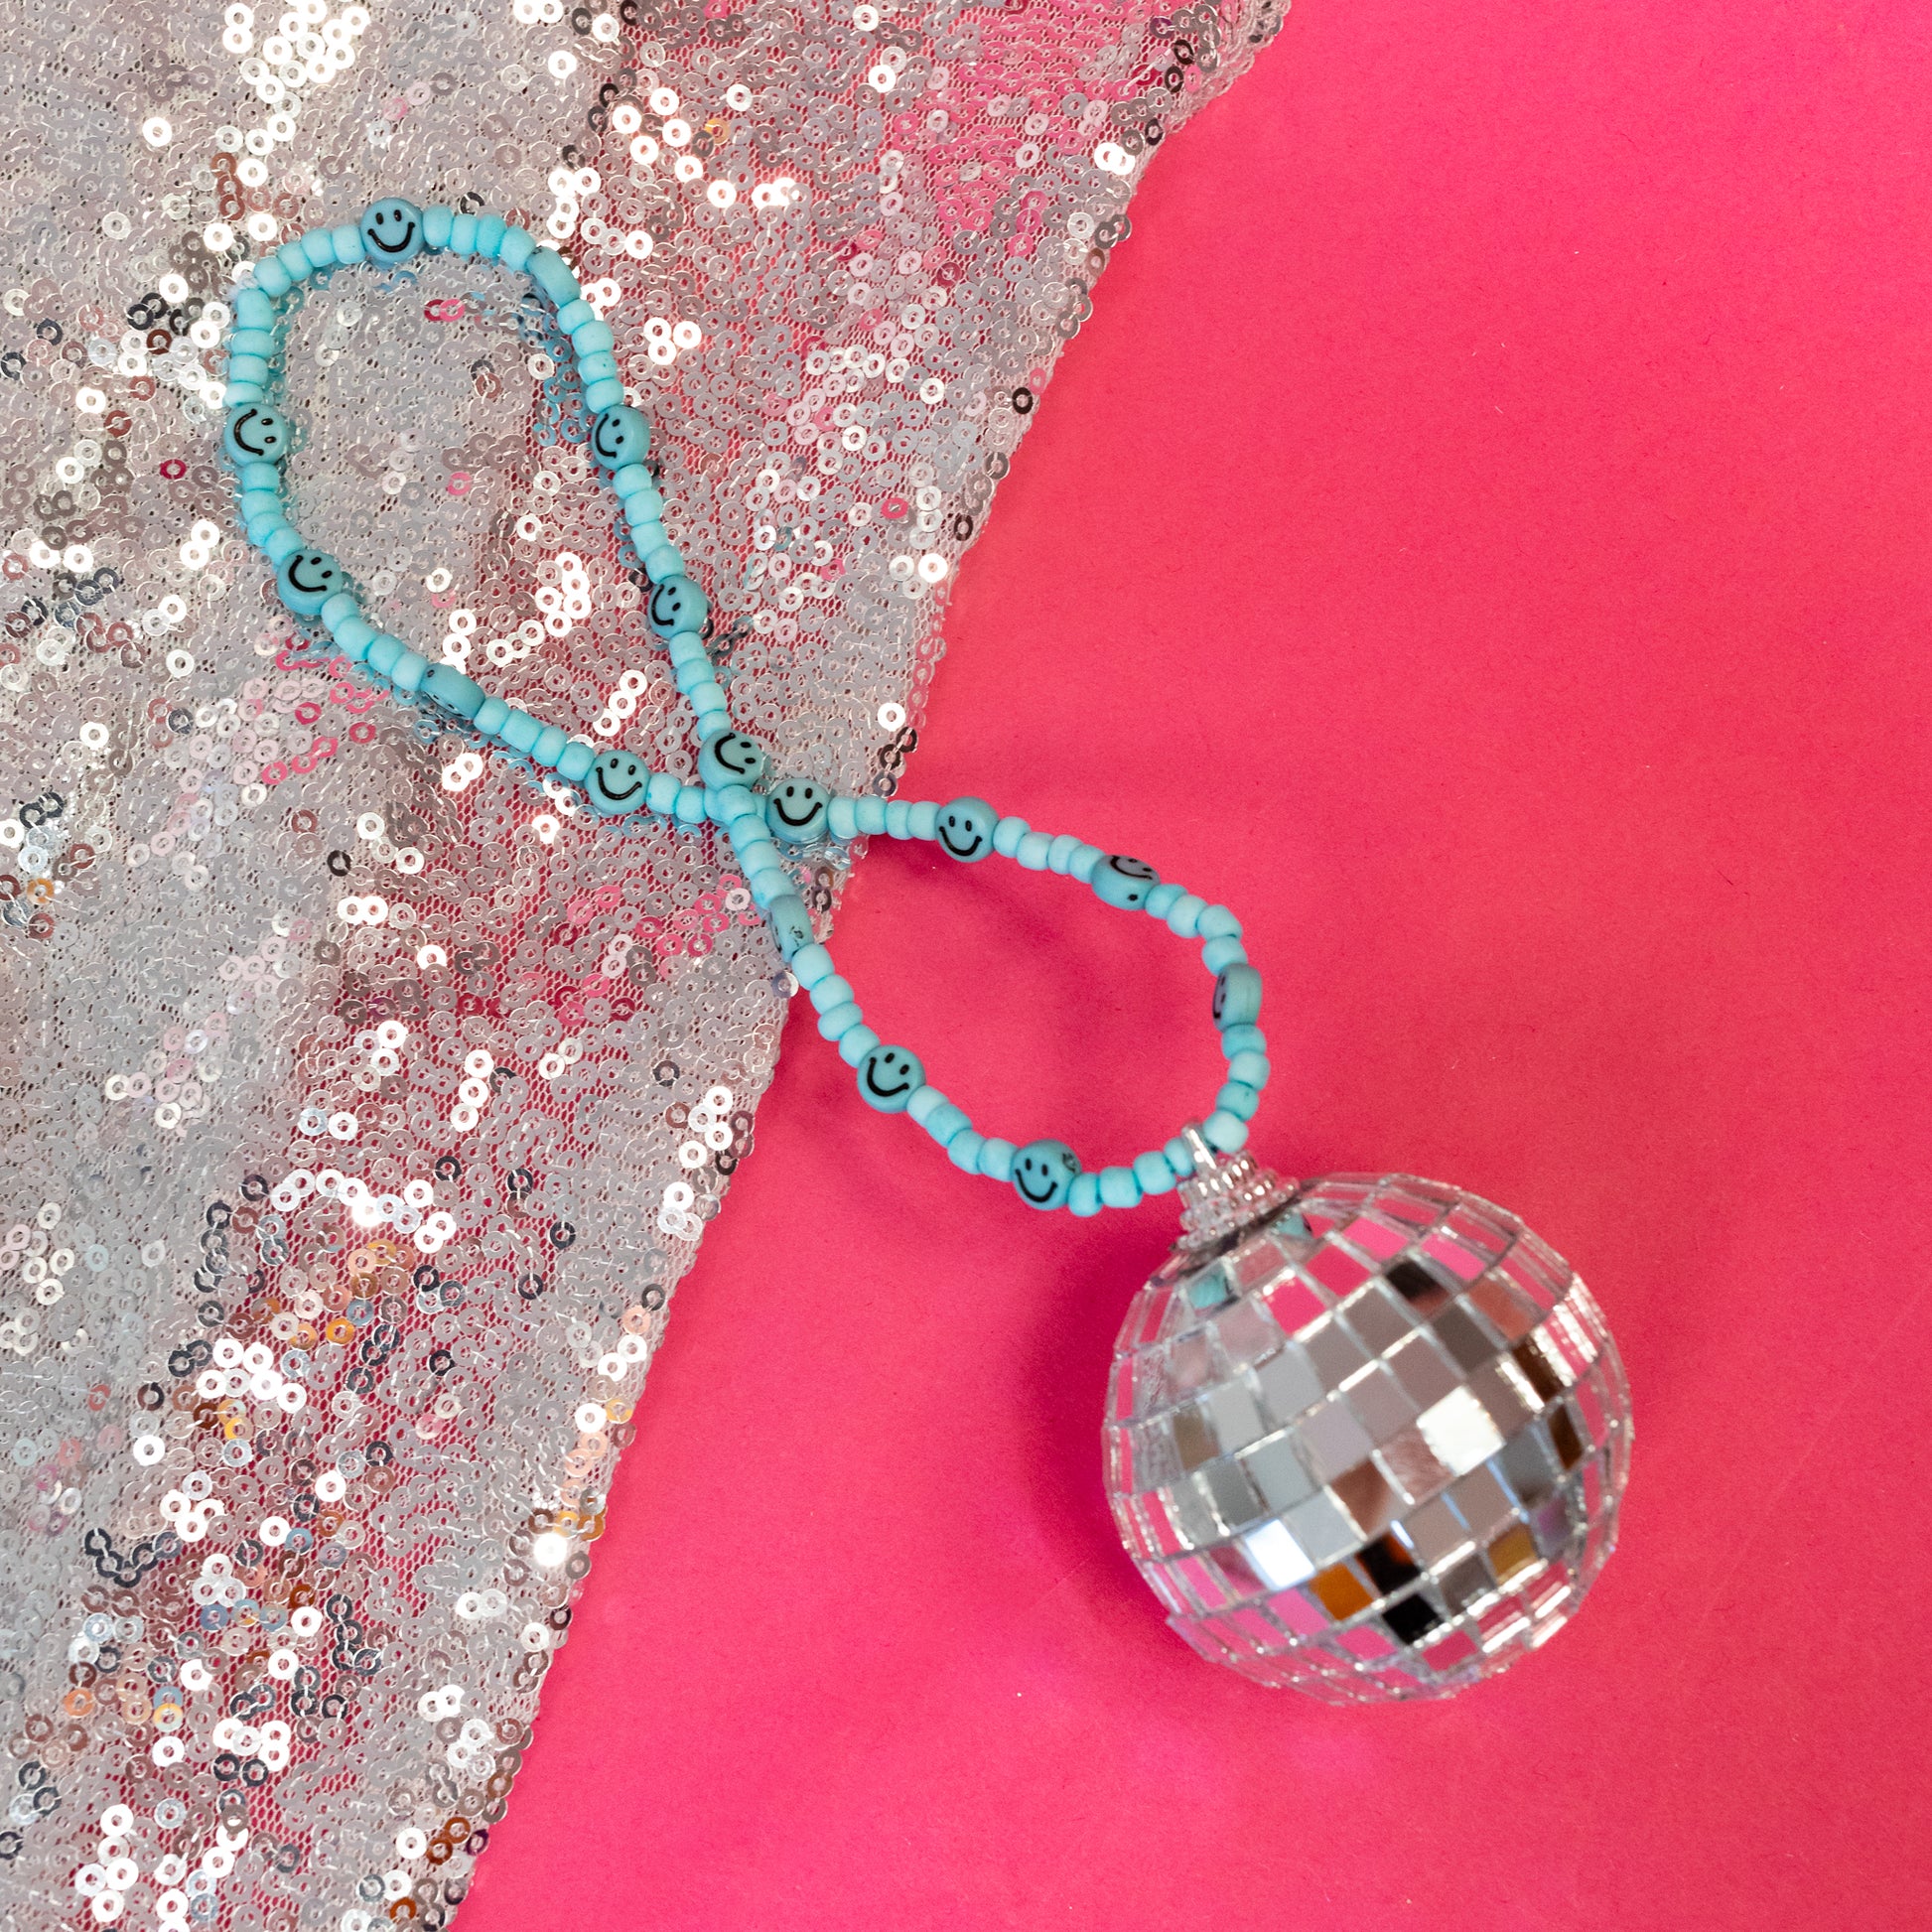 Wholesale Necklace Royal Blue Disco Ball Bead Set for Women